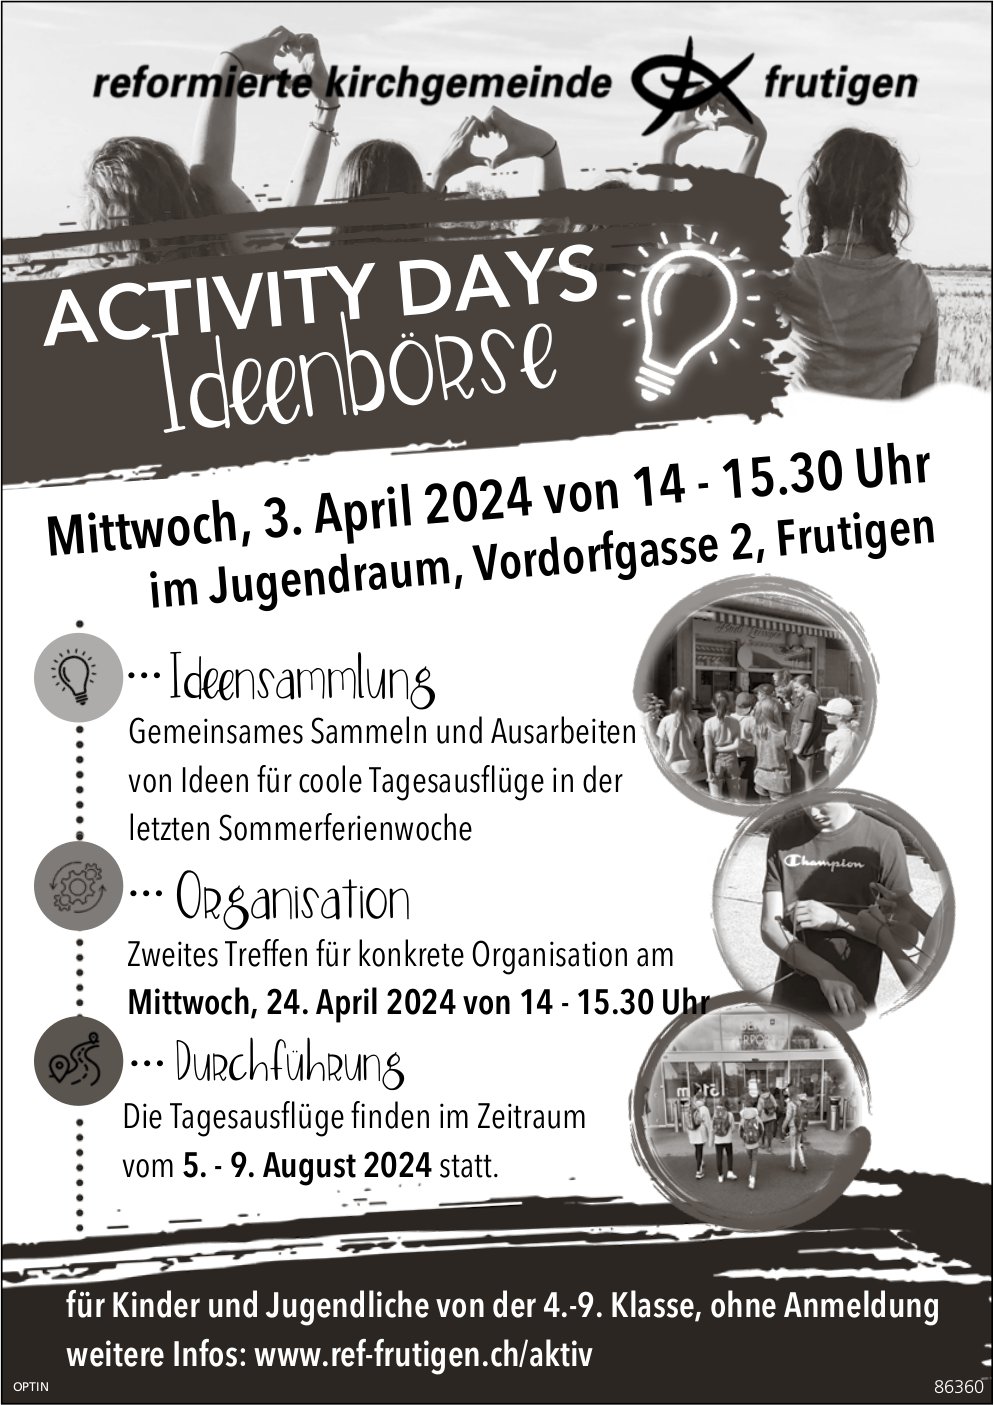 Activity Days Ideenbörse, 3. April, Jugendraum Vordorfgasse 2, Frutigen